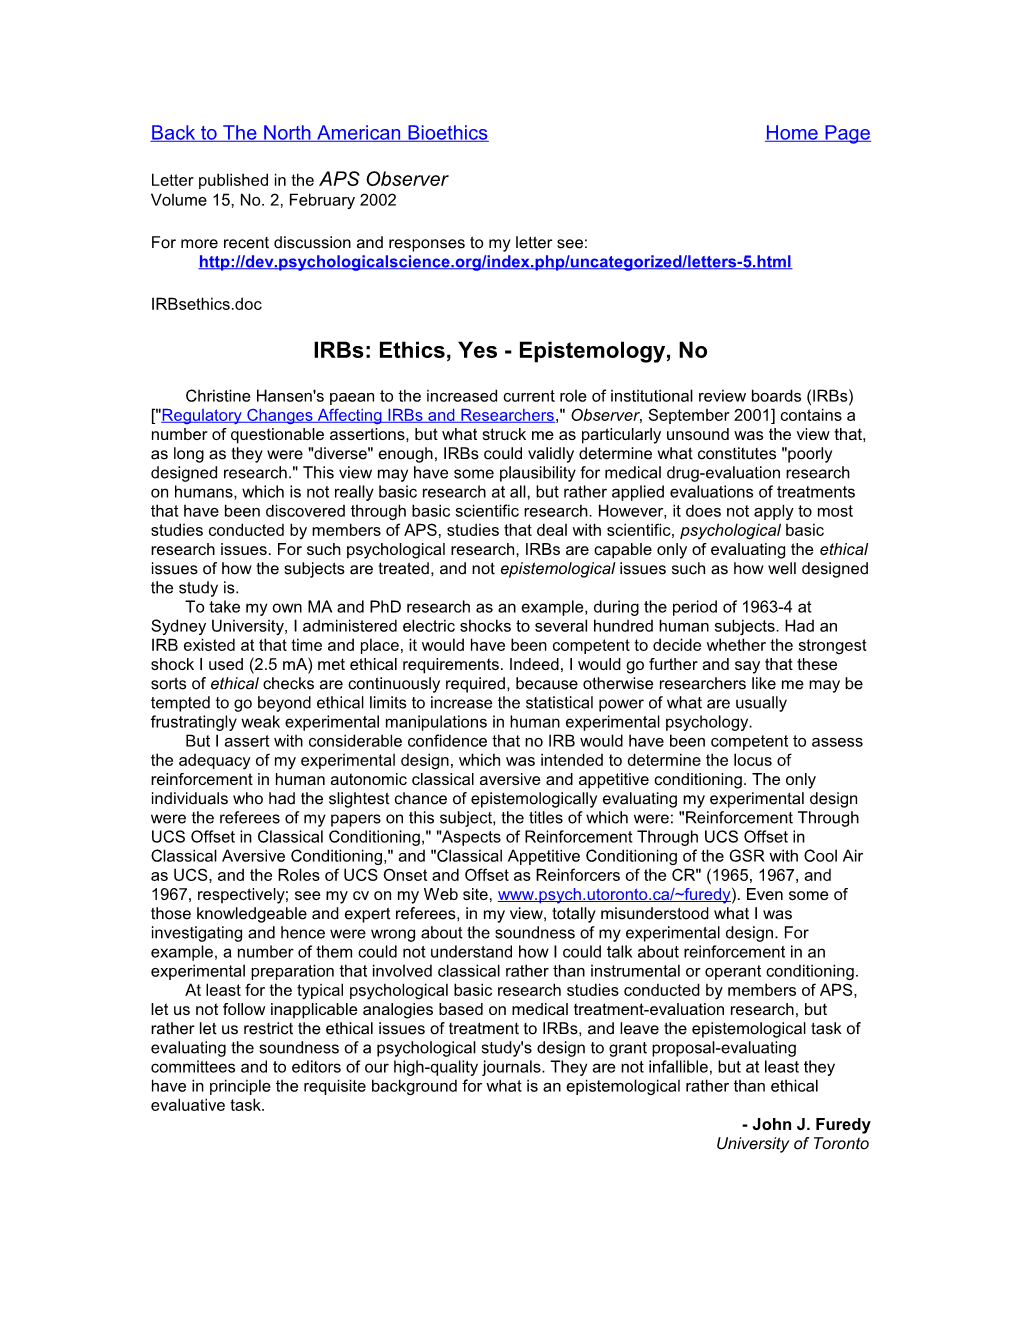 Irbs: Ethics, Yes - Epistemology, No